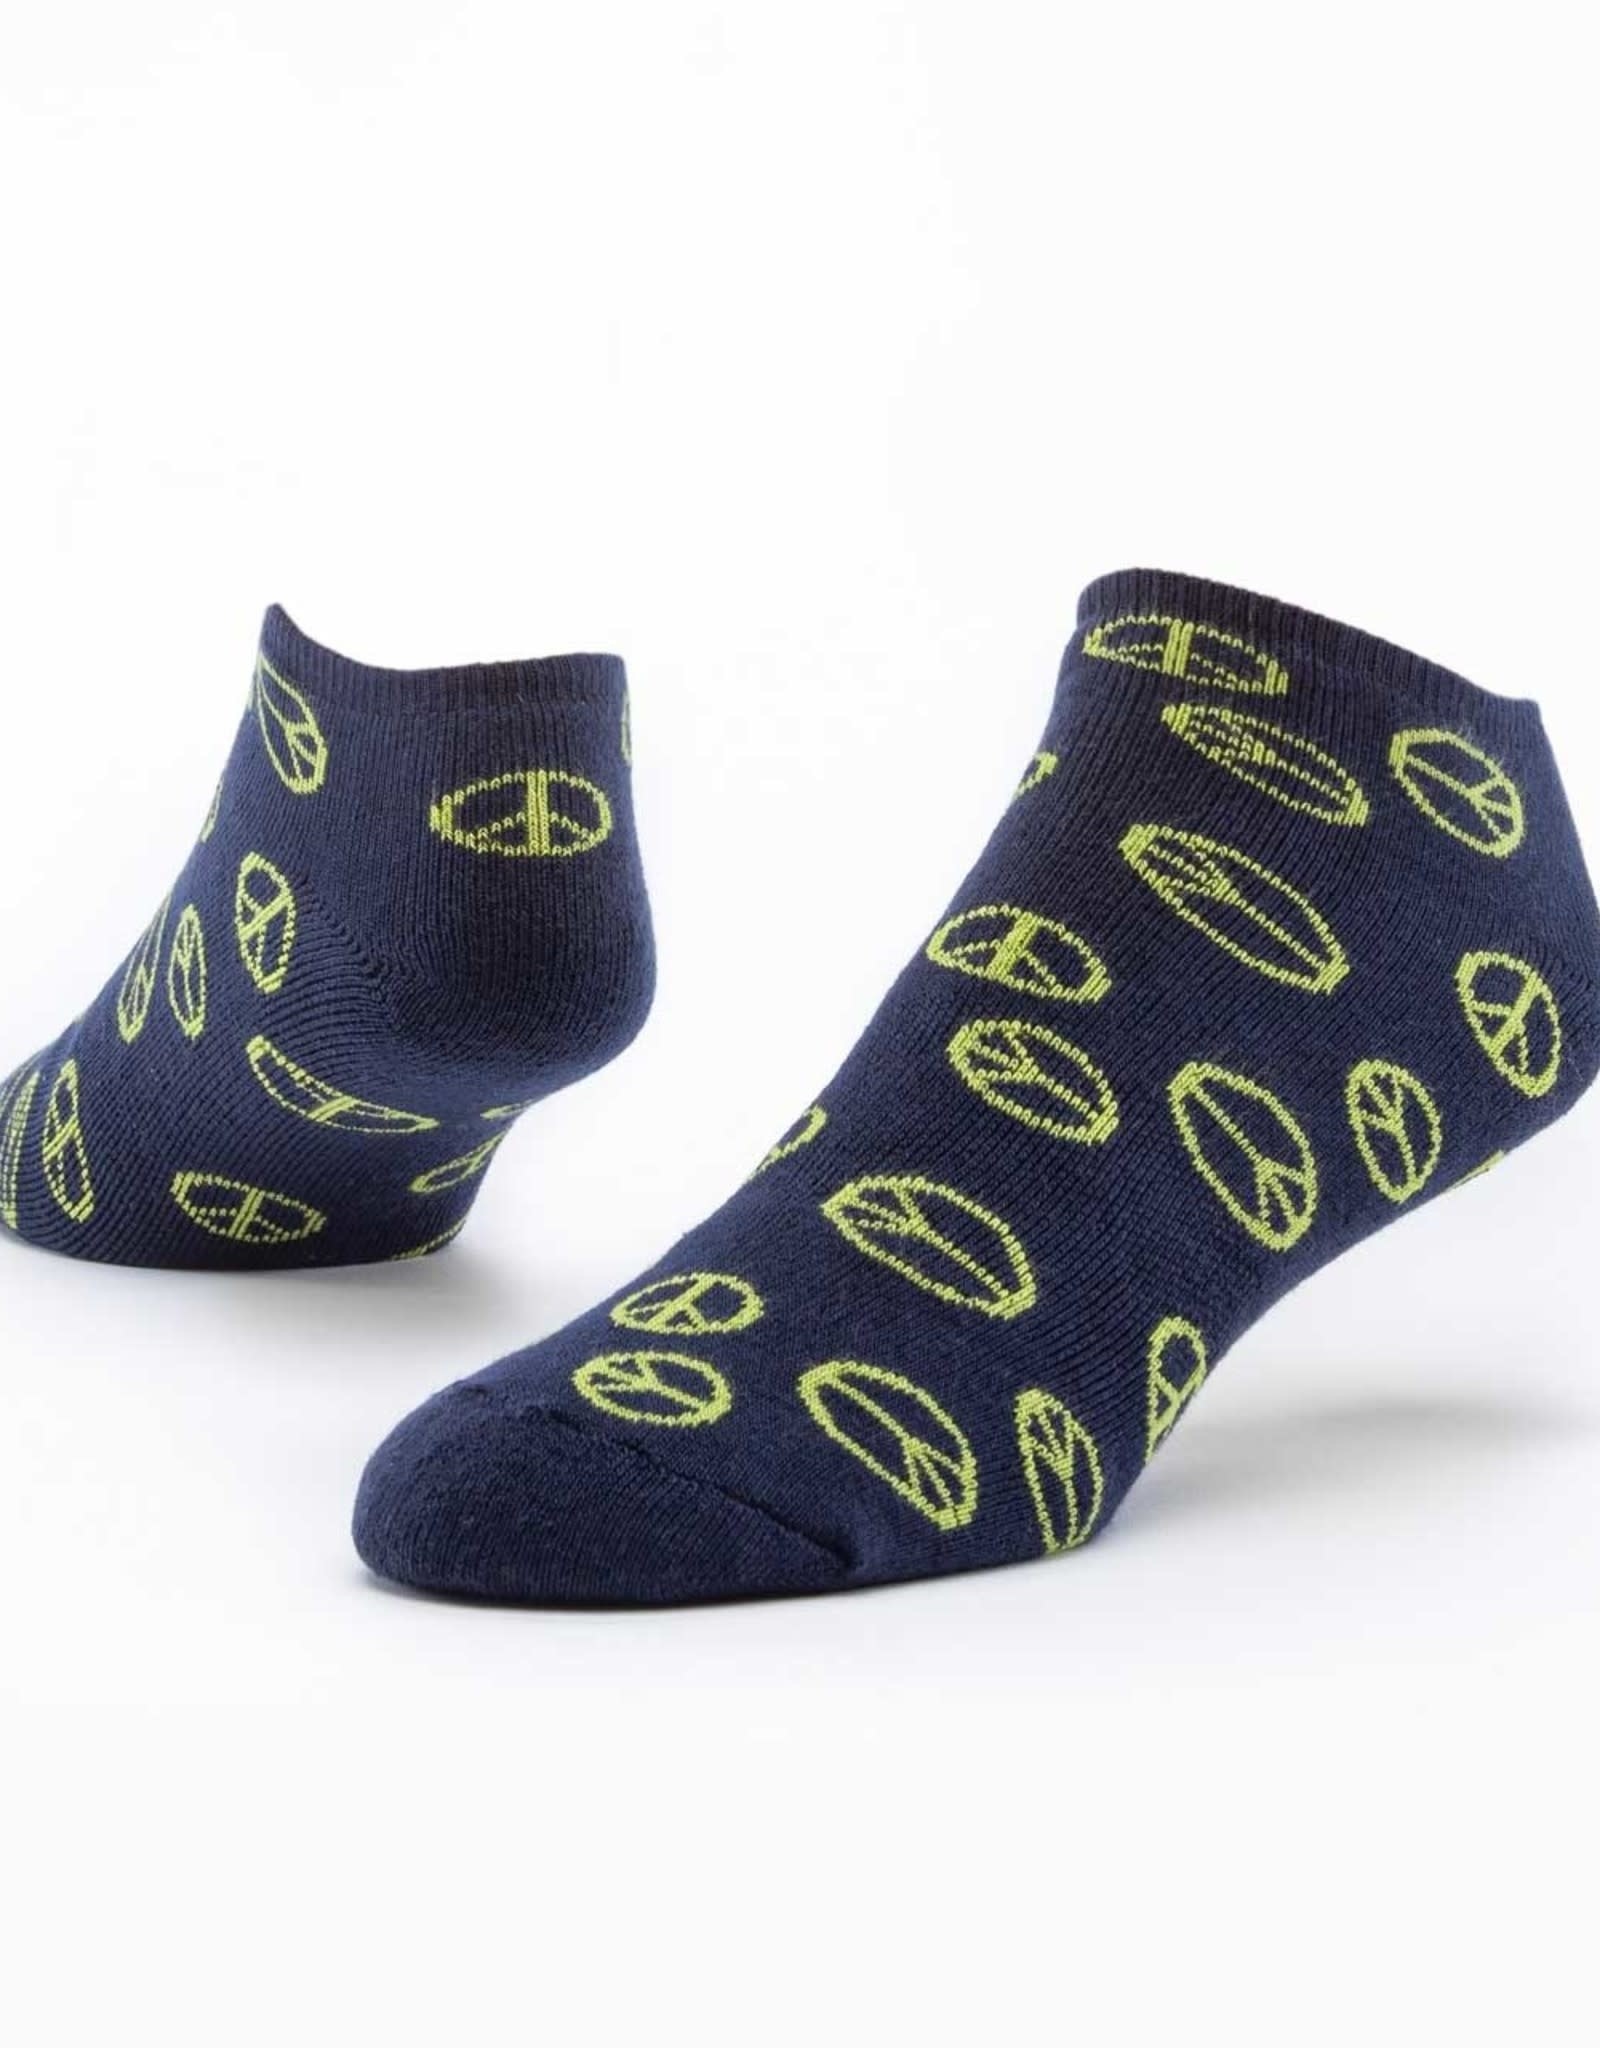 Maggie's Organics Footie Socks (Navy Peace)